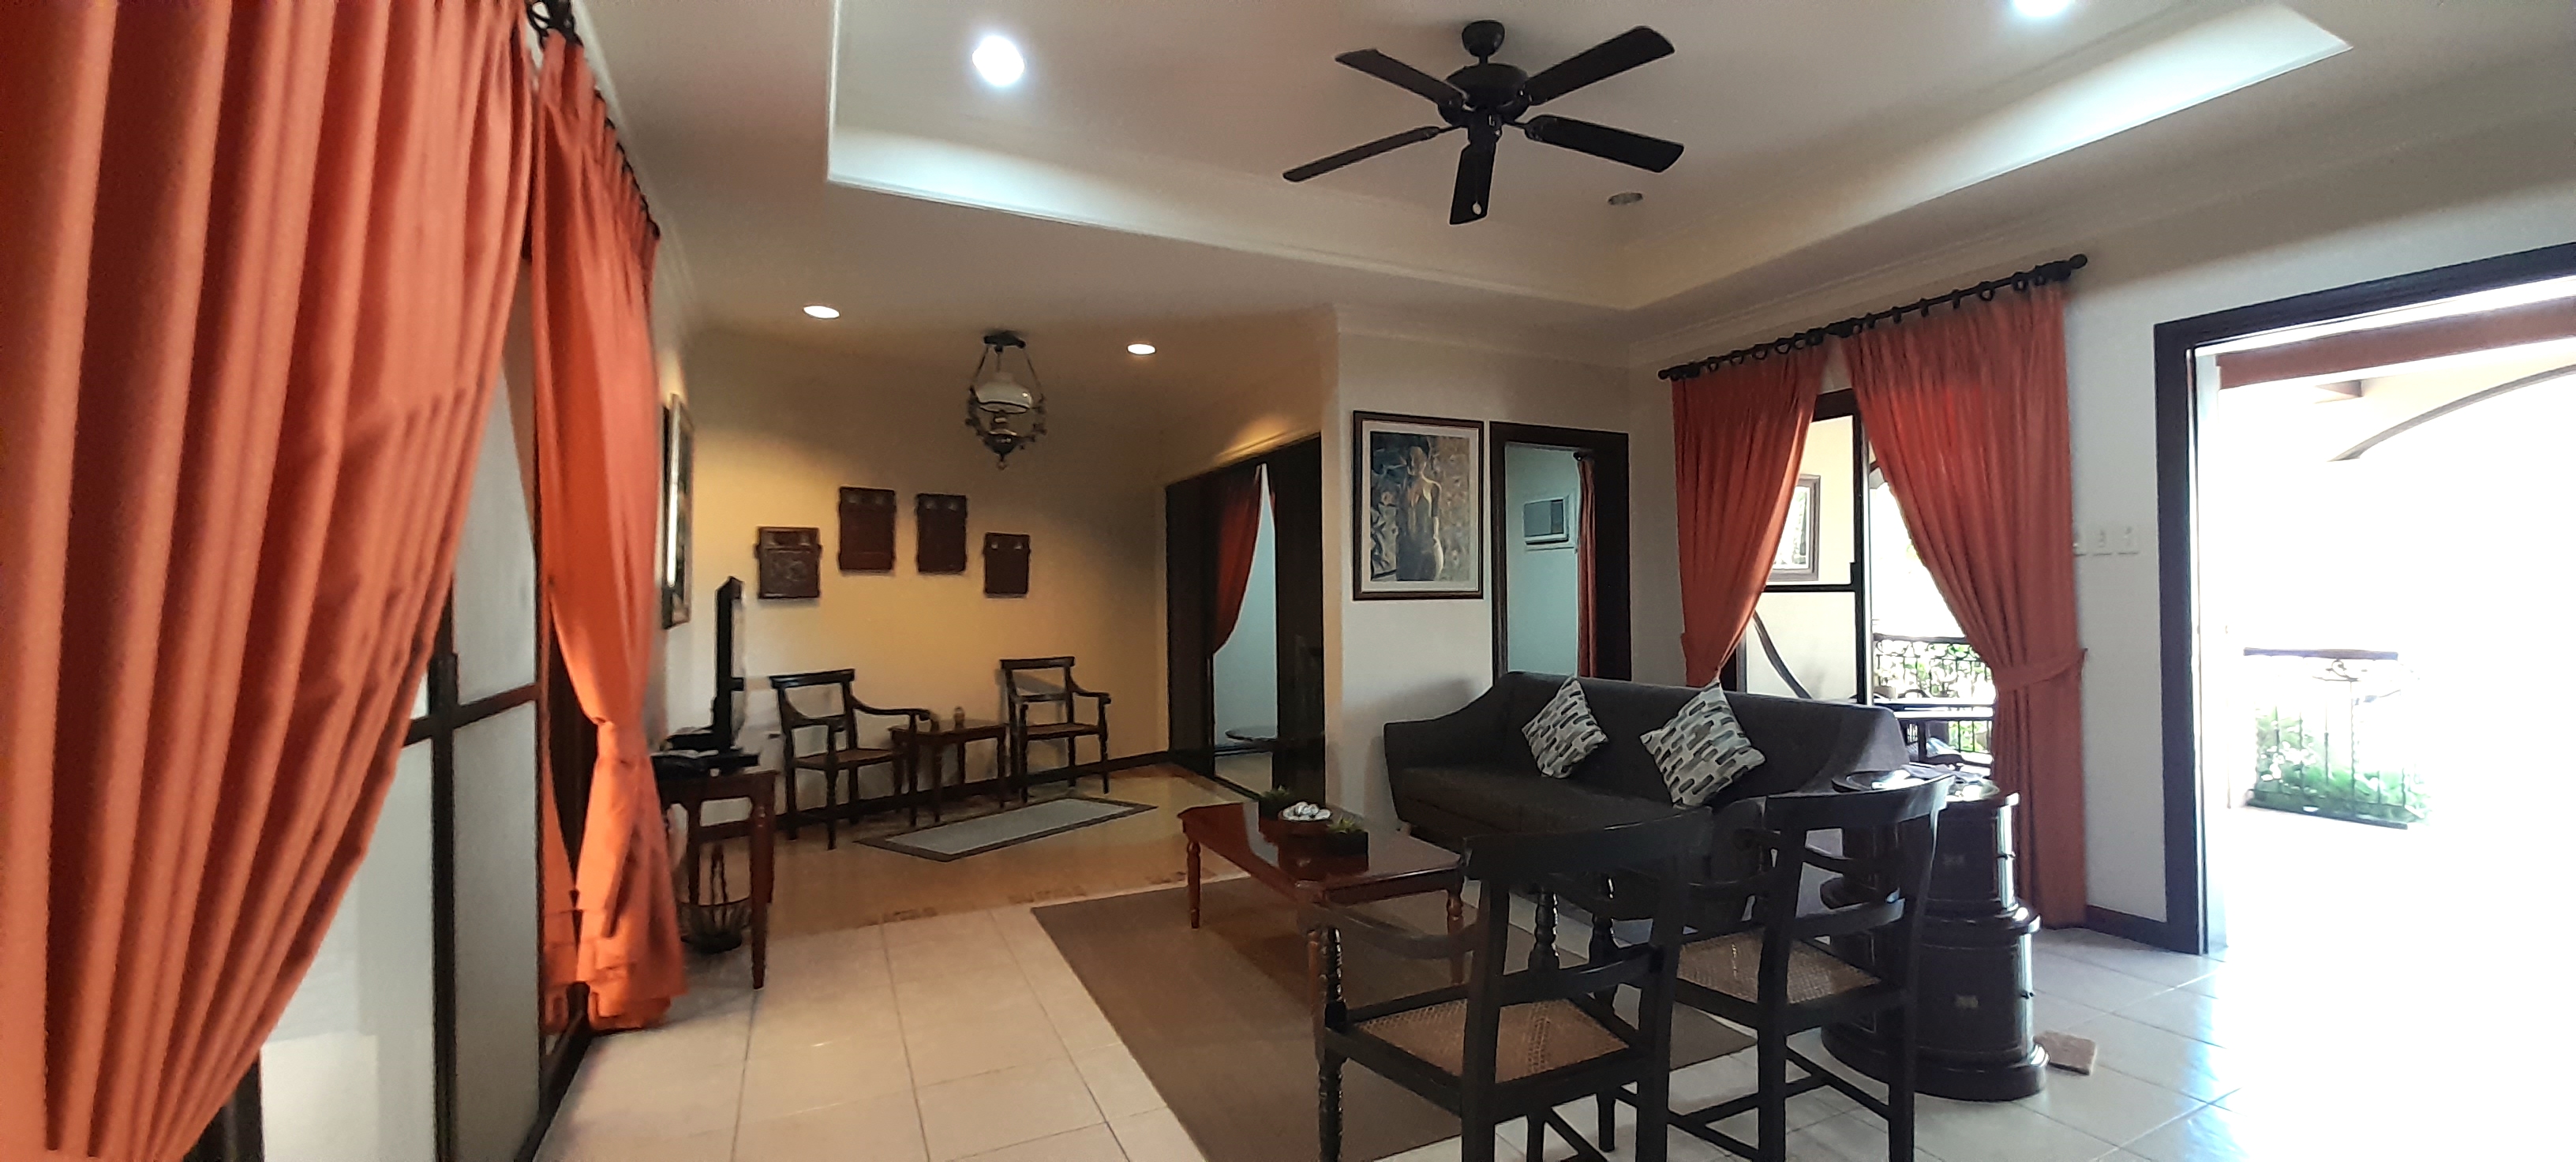 3-bedroom-furnished-house-with-swimming-pool-in-banilad-cebu-city-cebu